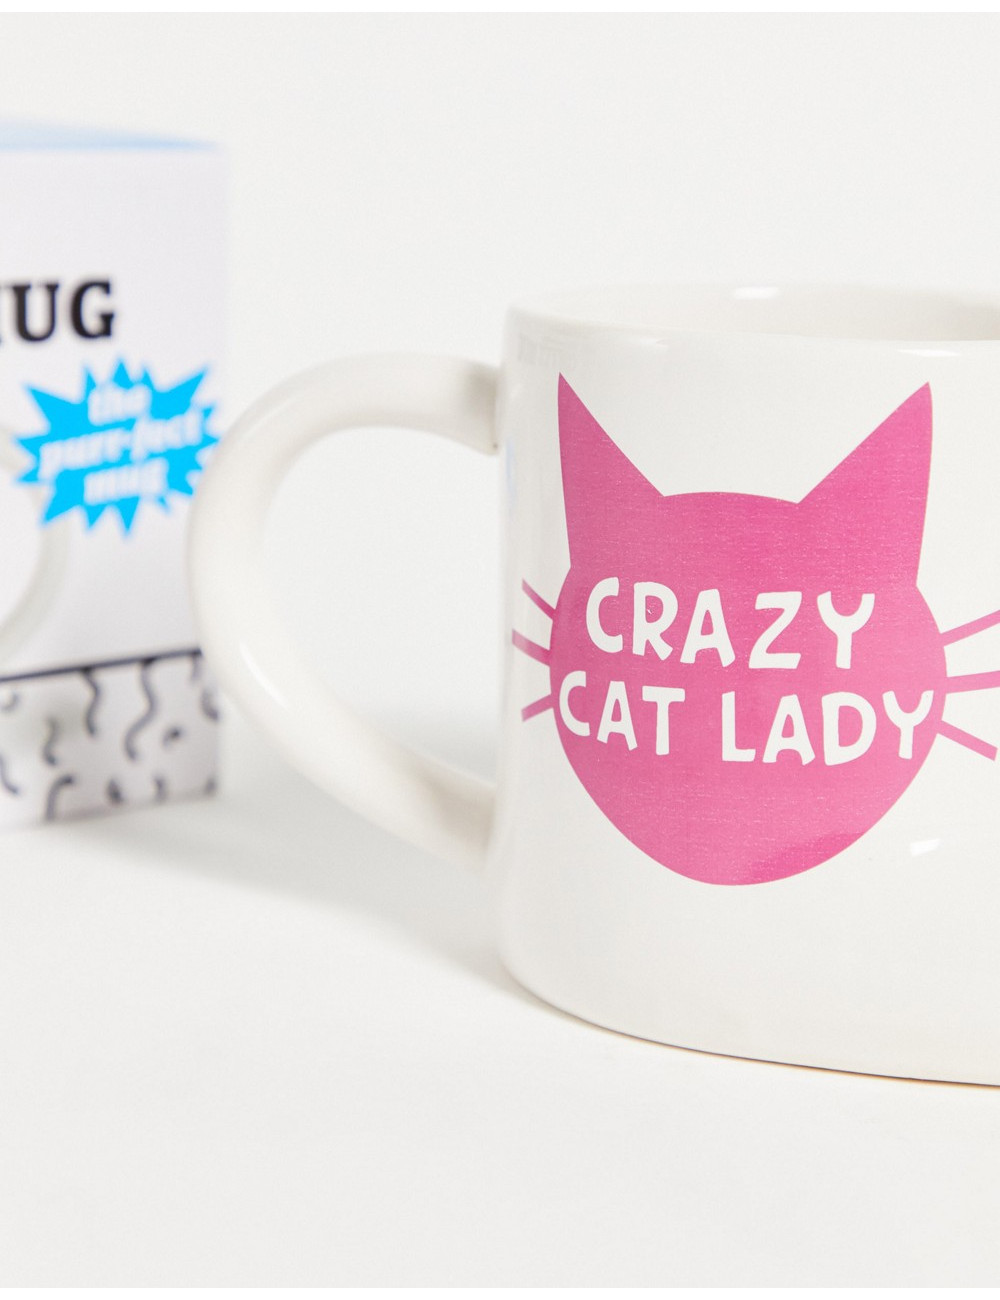 Big Mouth cat lady mug